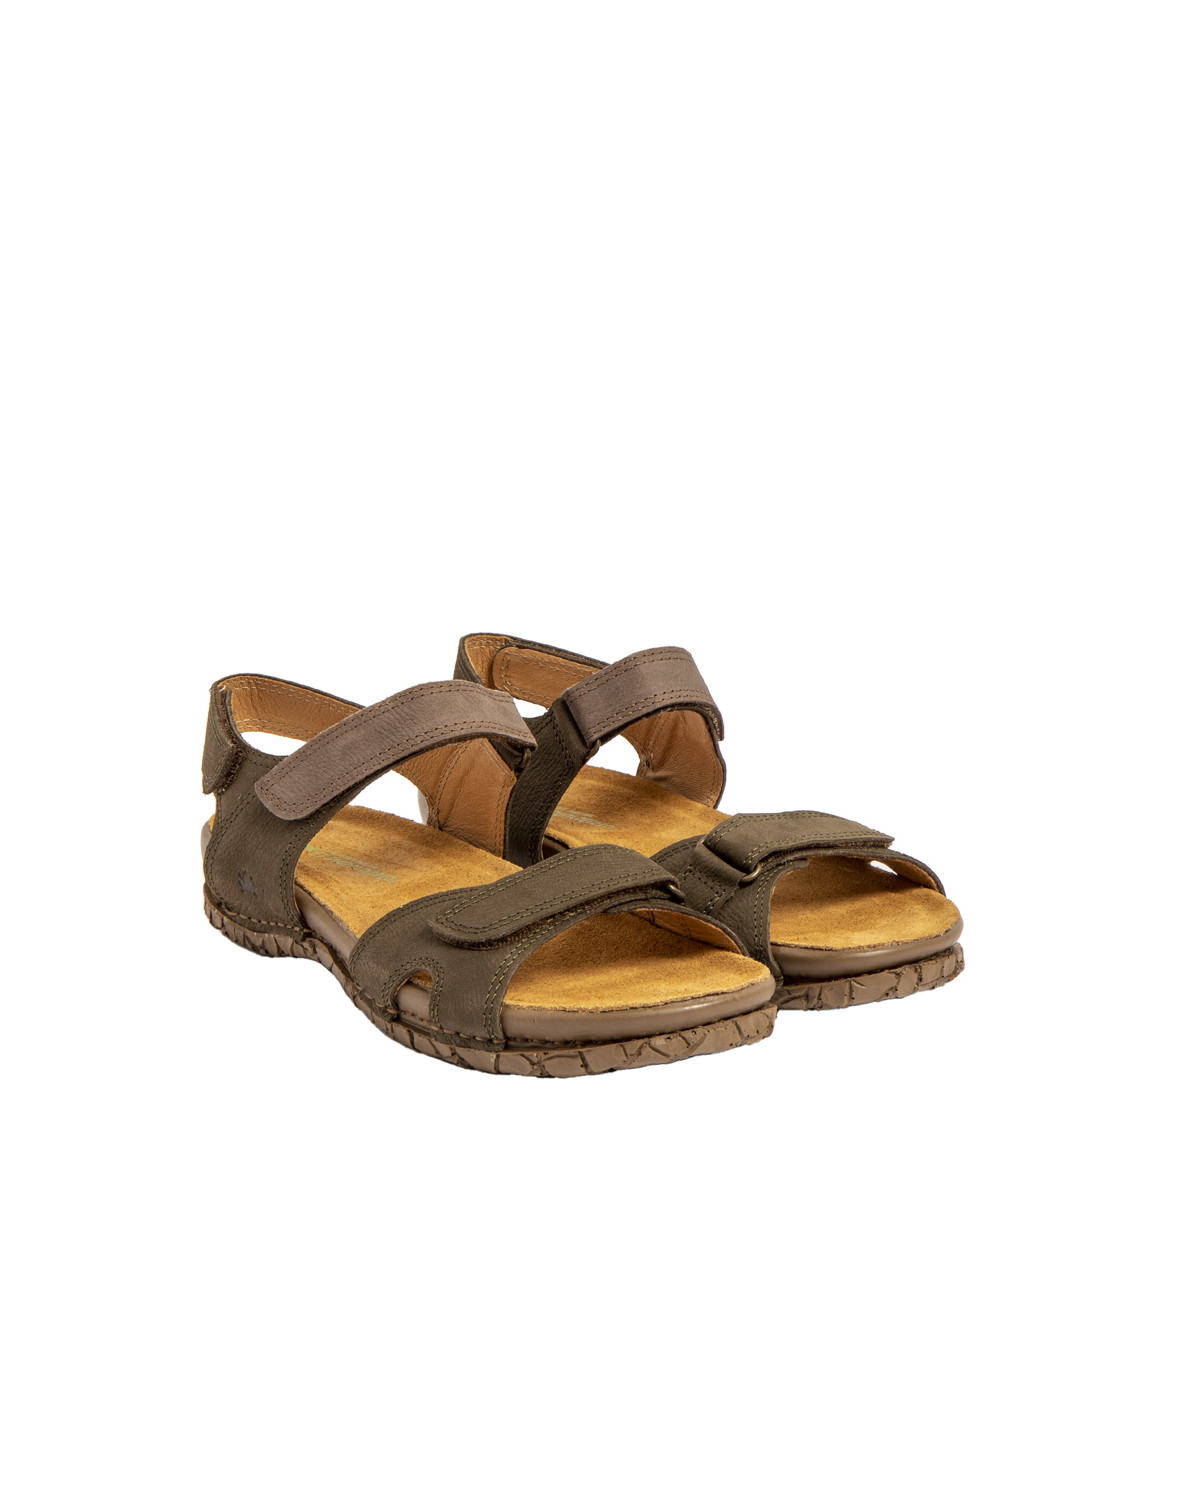 Sandales confortables plates en cuir à scratch et semelles ergonomiques - Vert - El naturalista